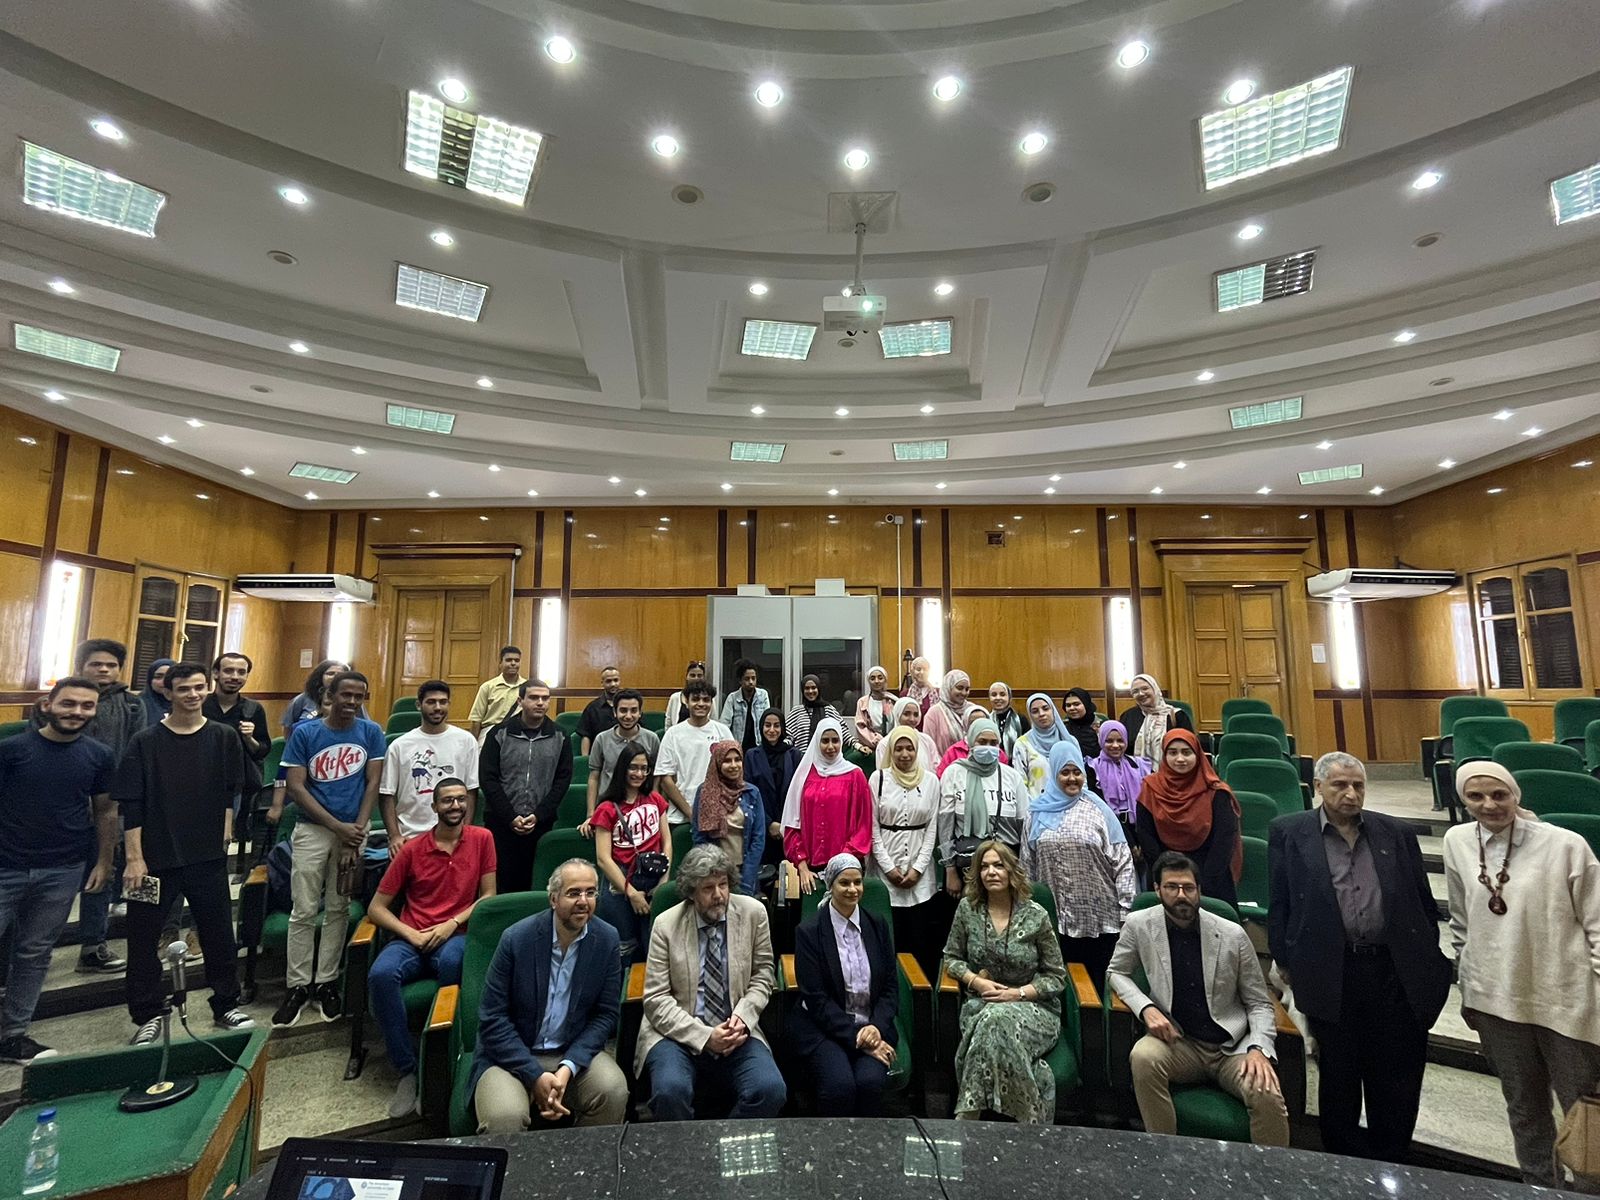 Cairo University and AUC partnership group photo